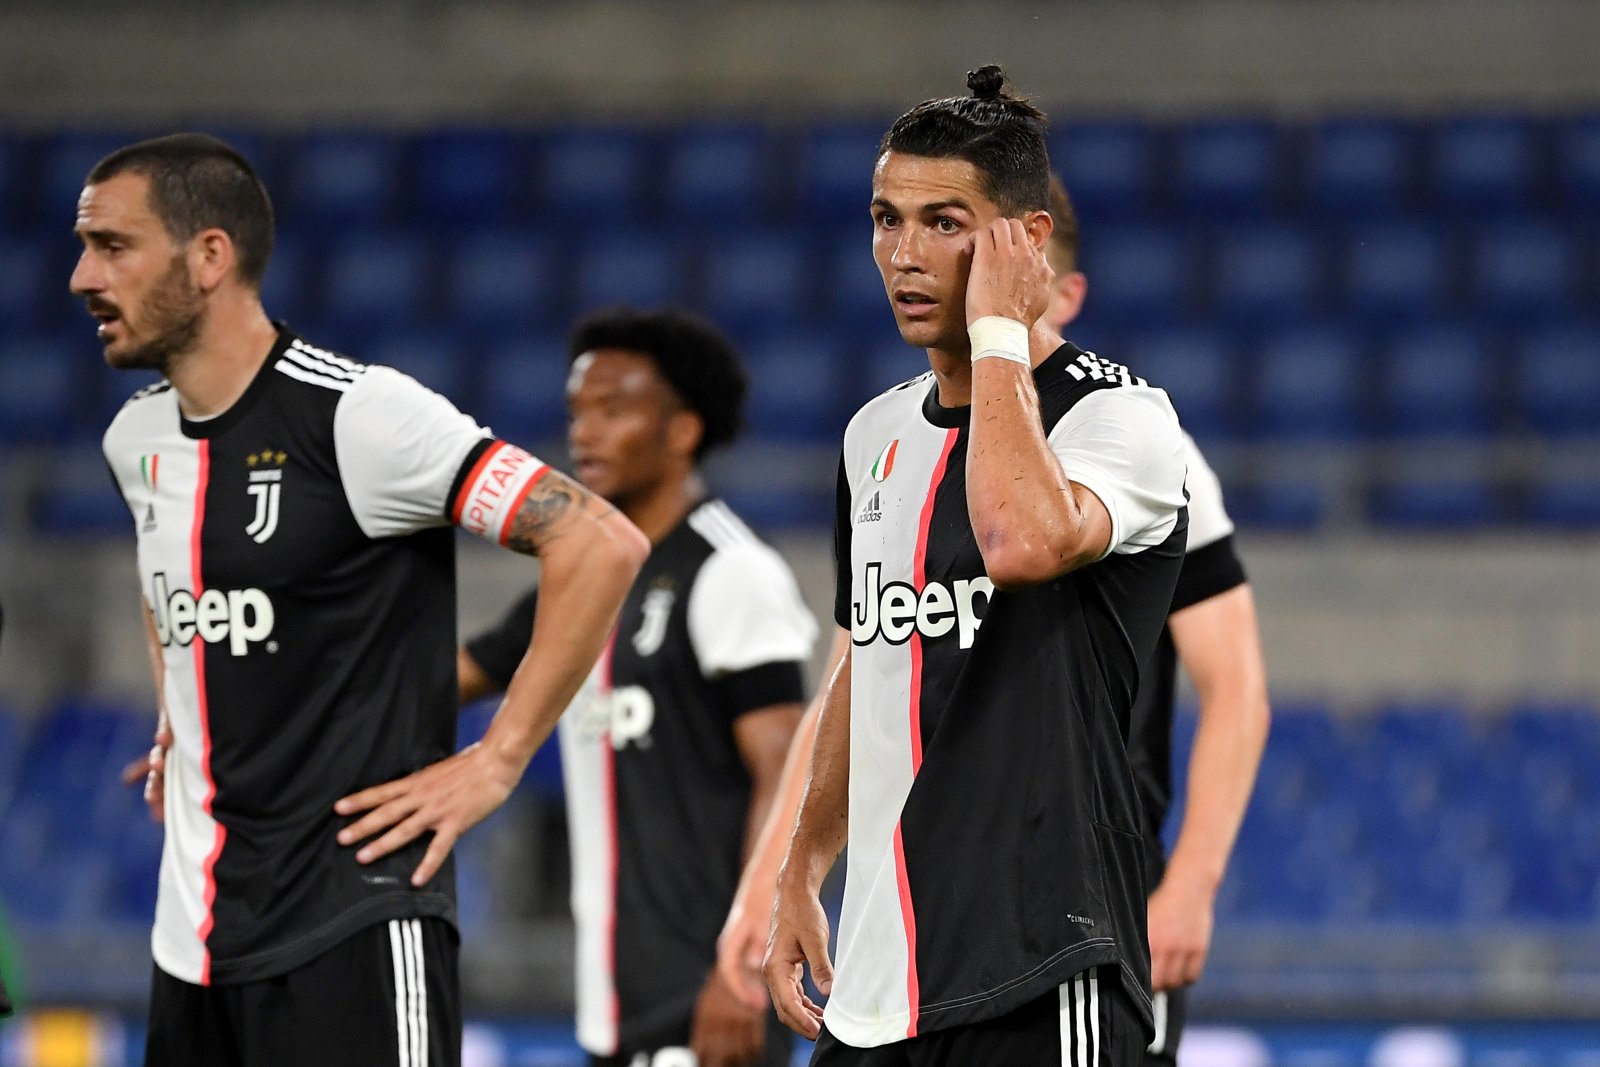 Coppa-Italia-Final-Napoli-Juventus-Ronaldo